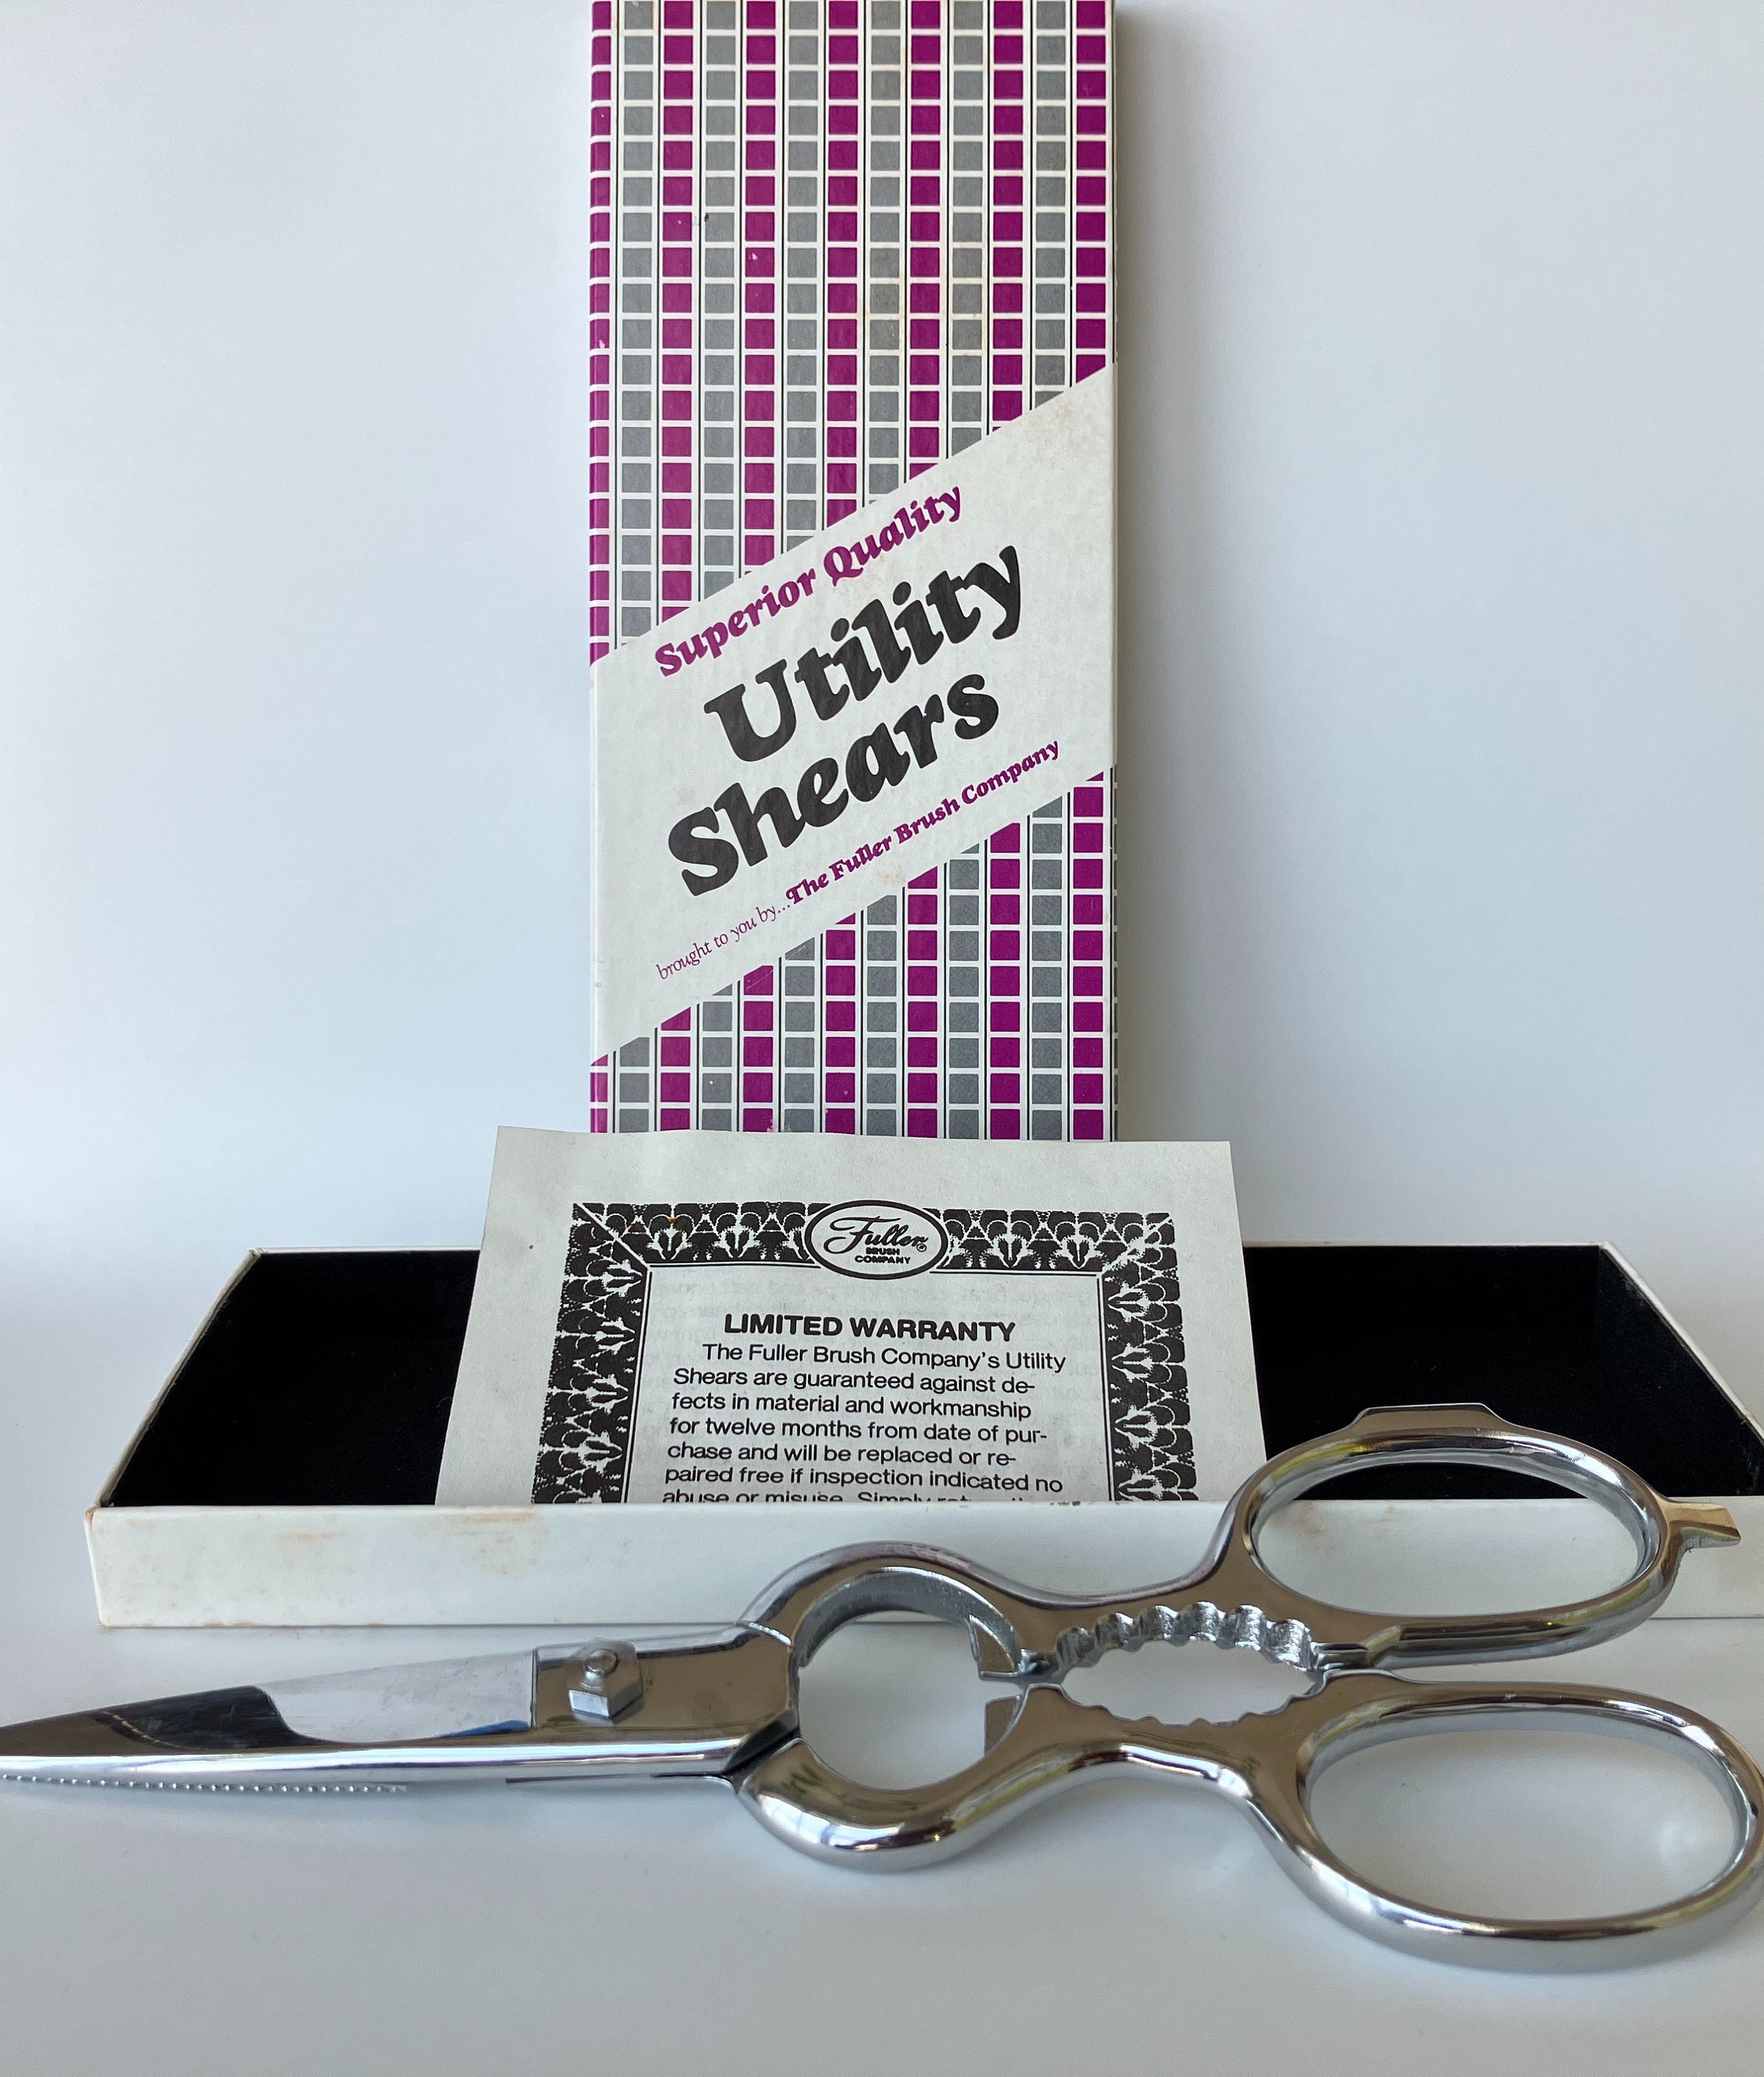 Cutco Shears/Scissors - The Hairy Potato